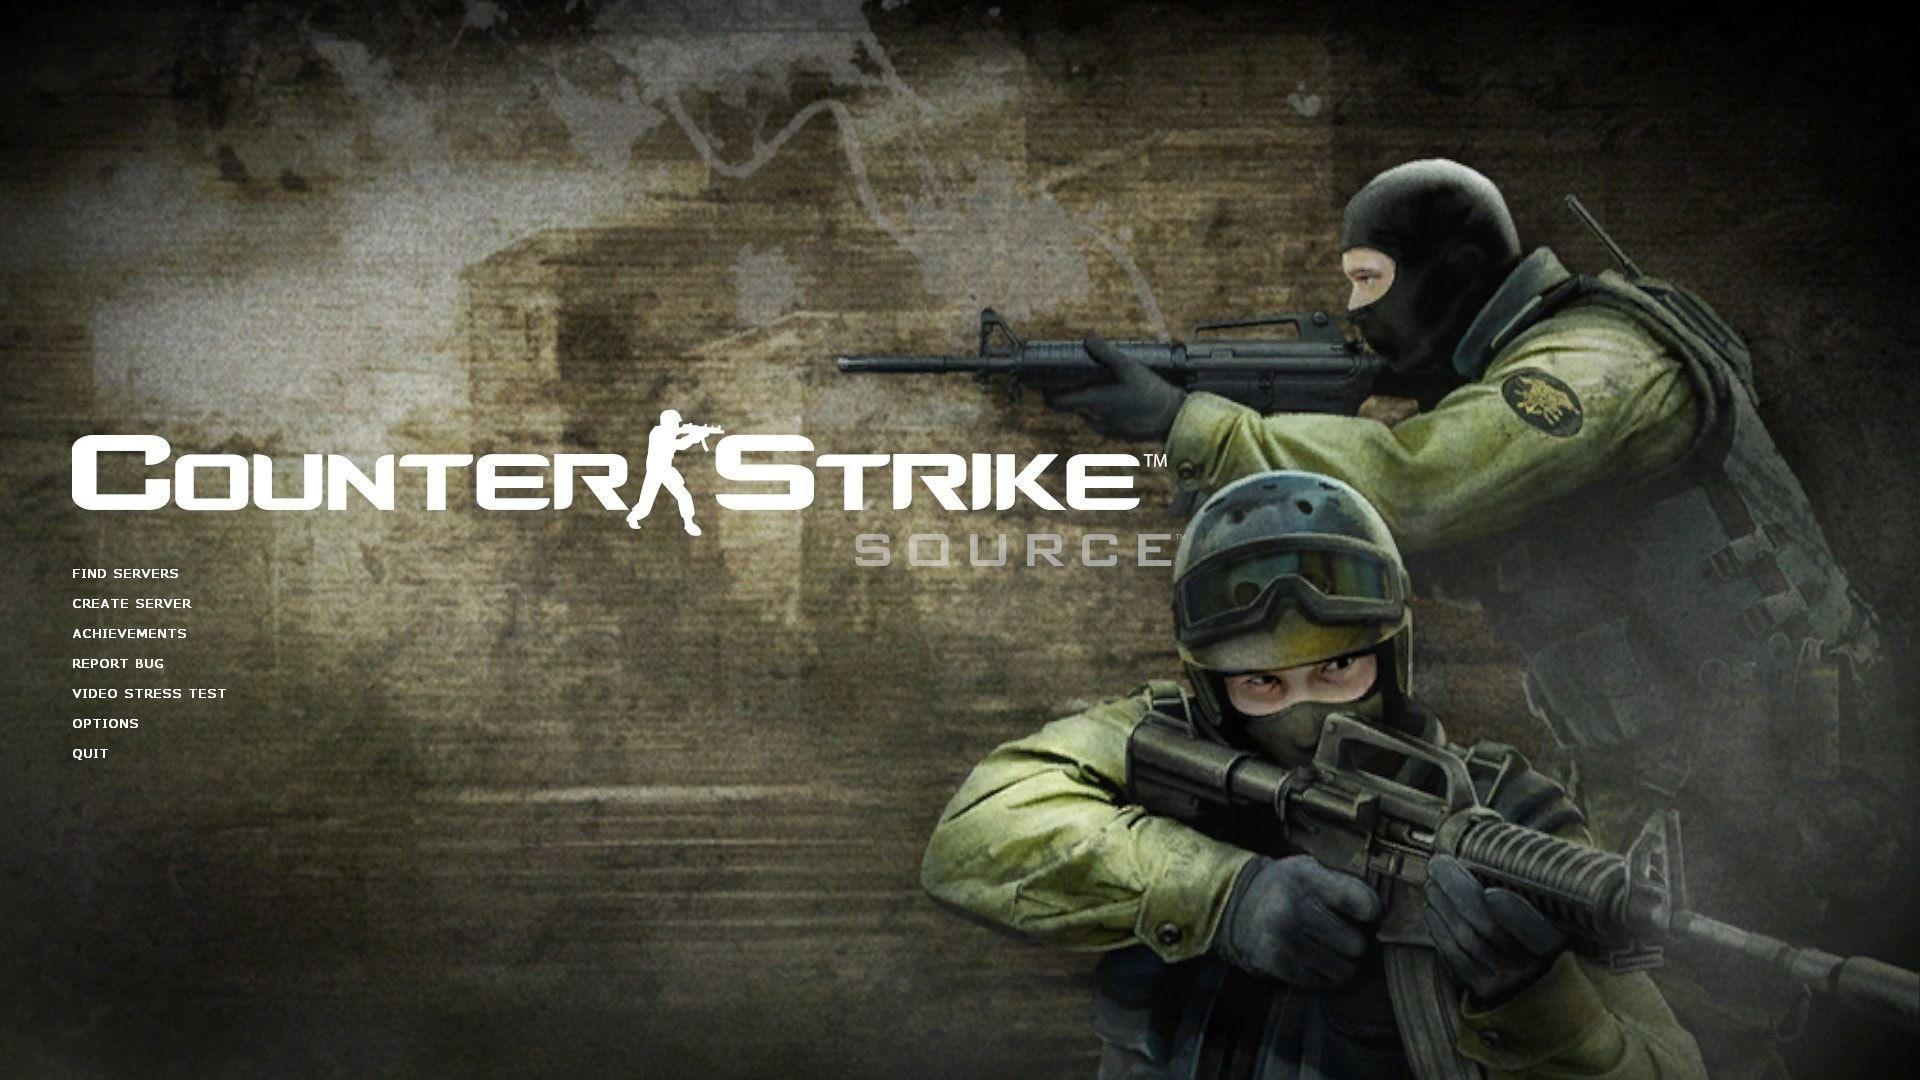 Counter Strike: Source HD Desktop Wallpaperwallpaper.net